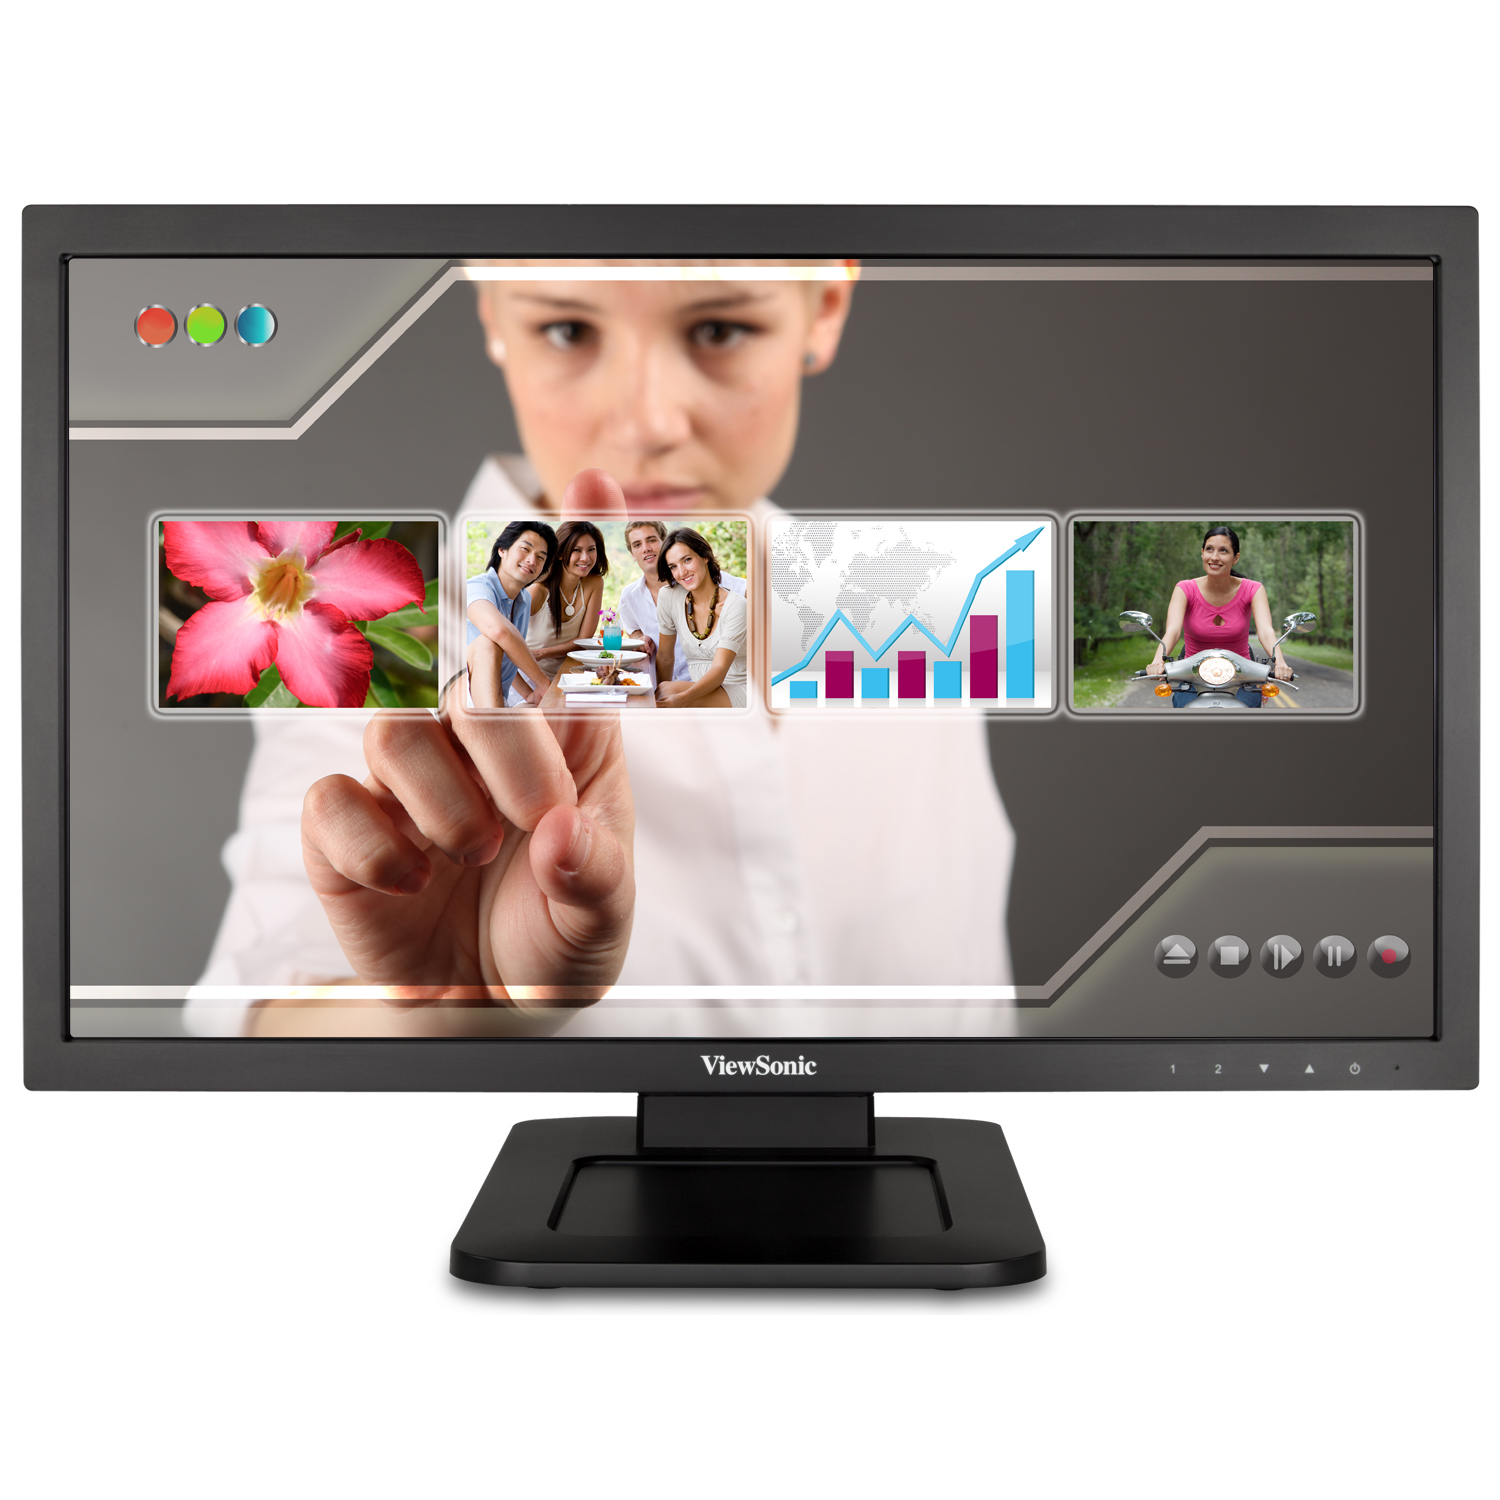 ViewSonic TD2220 - LED monitor - 22" (21.5" viewable) - touchscreen - 1920 x 1080 Full HD (1080p) - TN - 200 cd/m������ - 1000:1 - 5 ms - DVI-D, VGA - speakers - image 1 of 8